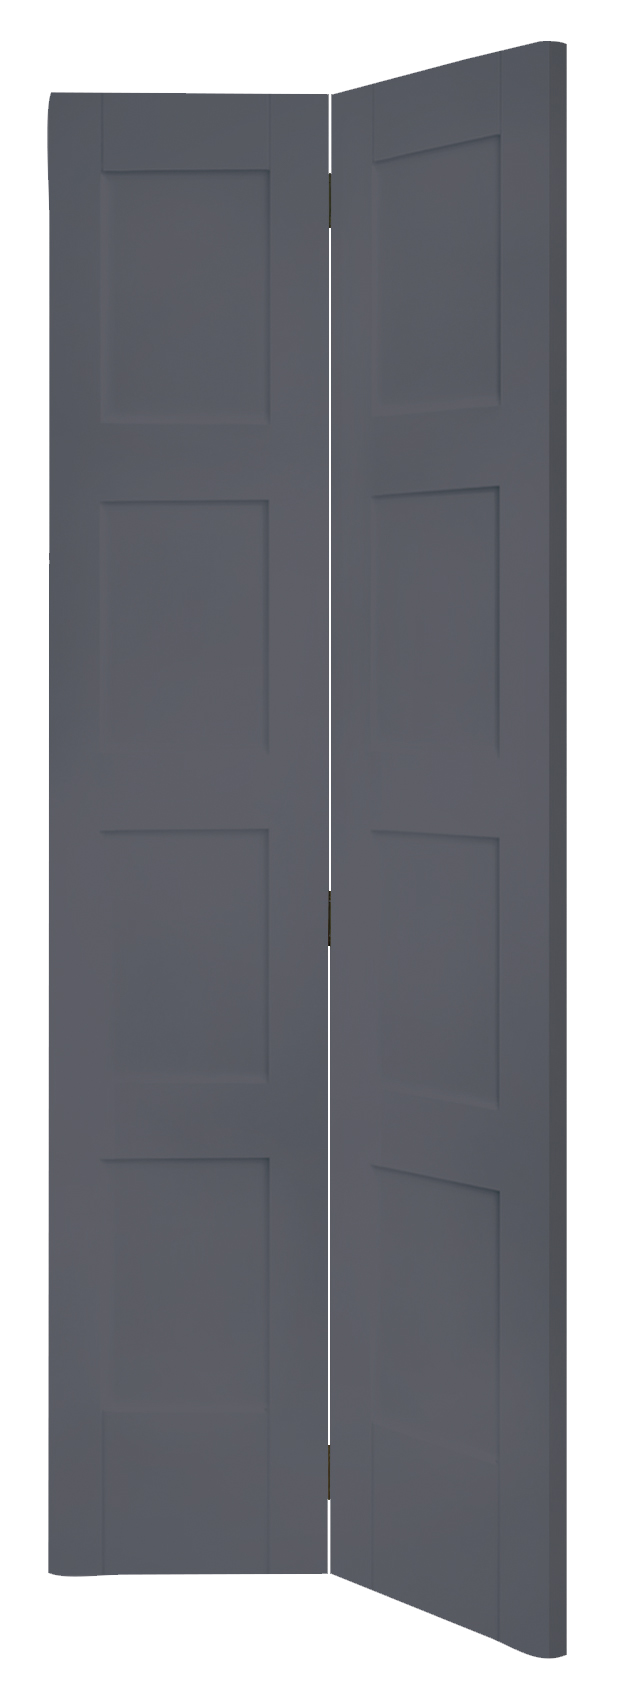 Shaker 4 Panel Bi-Fold Internal White Primed Door – Cinder, 1981 x 686 x 35 mm